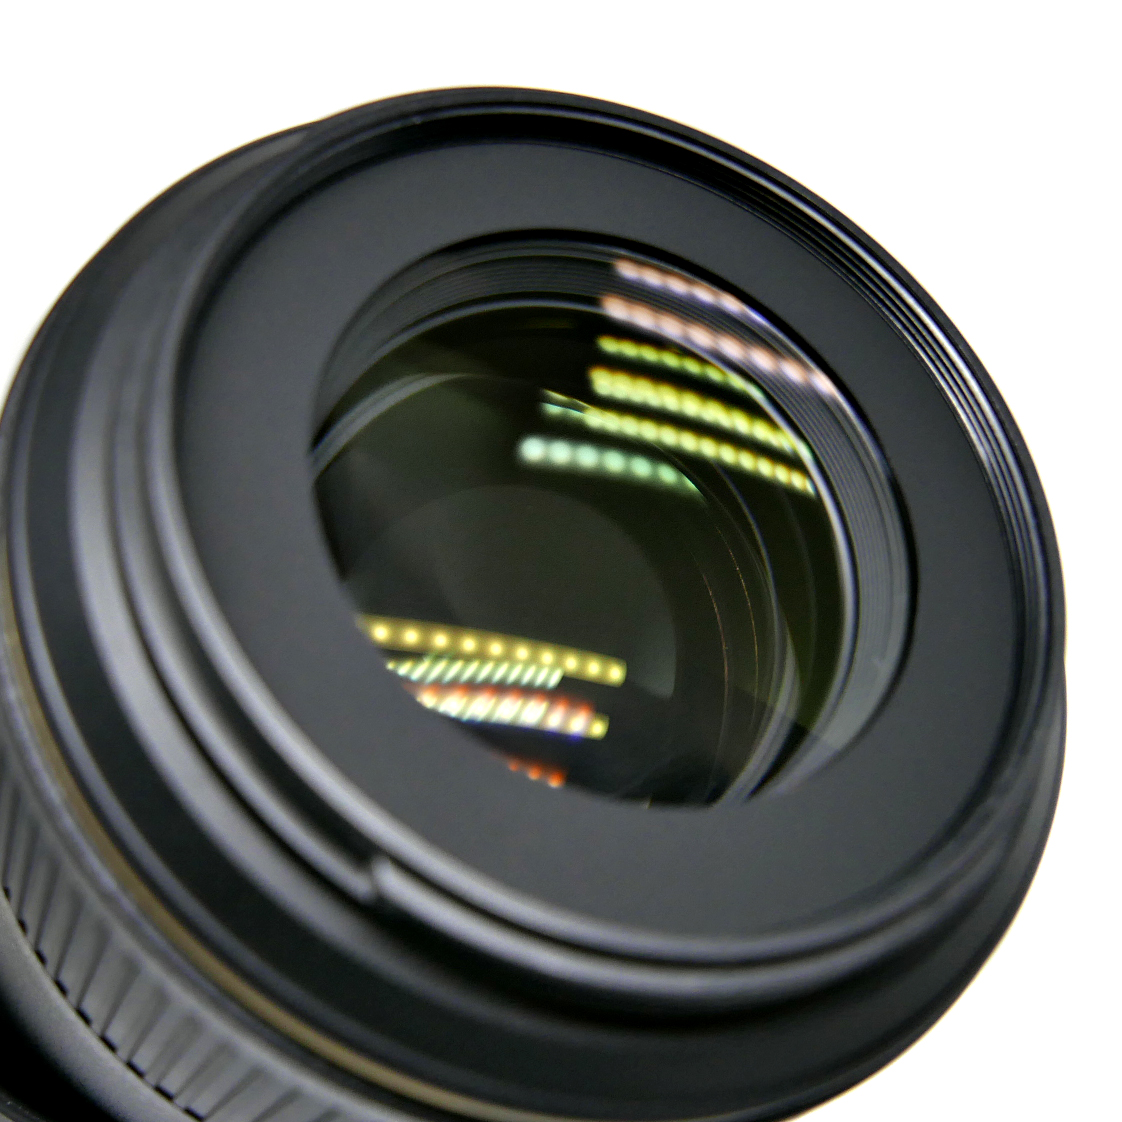 (Myyty) Nikon AF-S VR Micro Nikkor 105mm f/2.8G IF-ED (Käytetty)